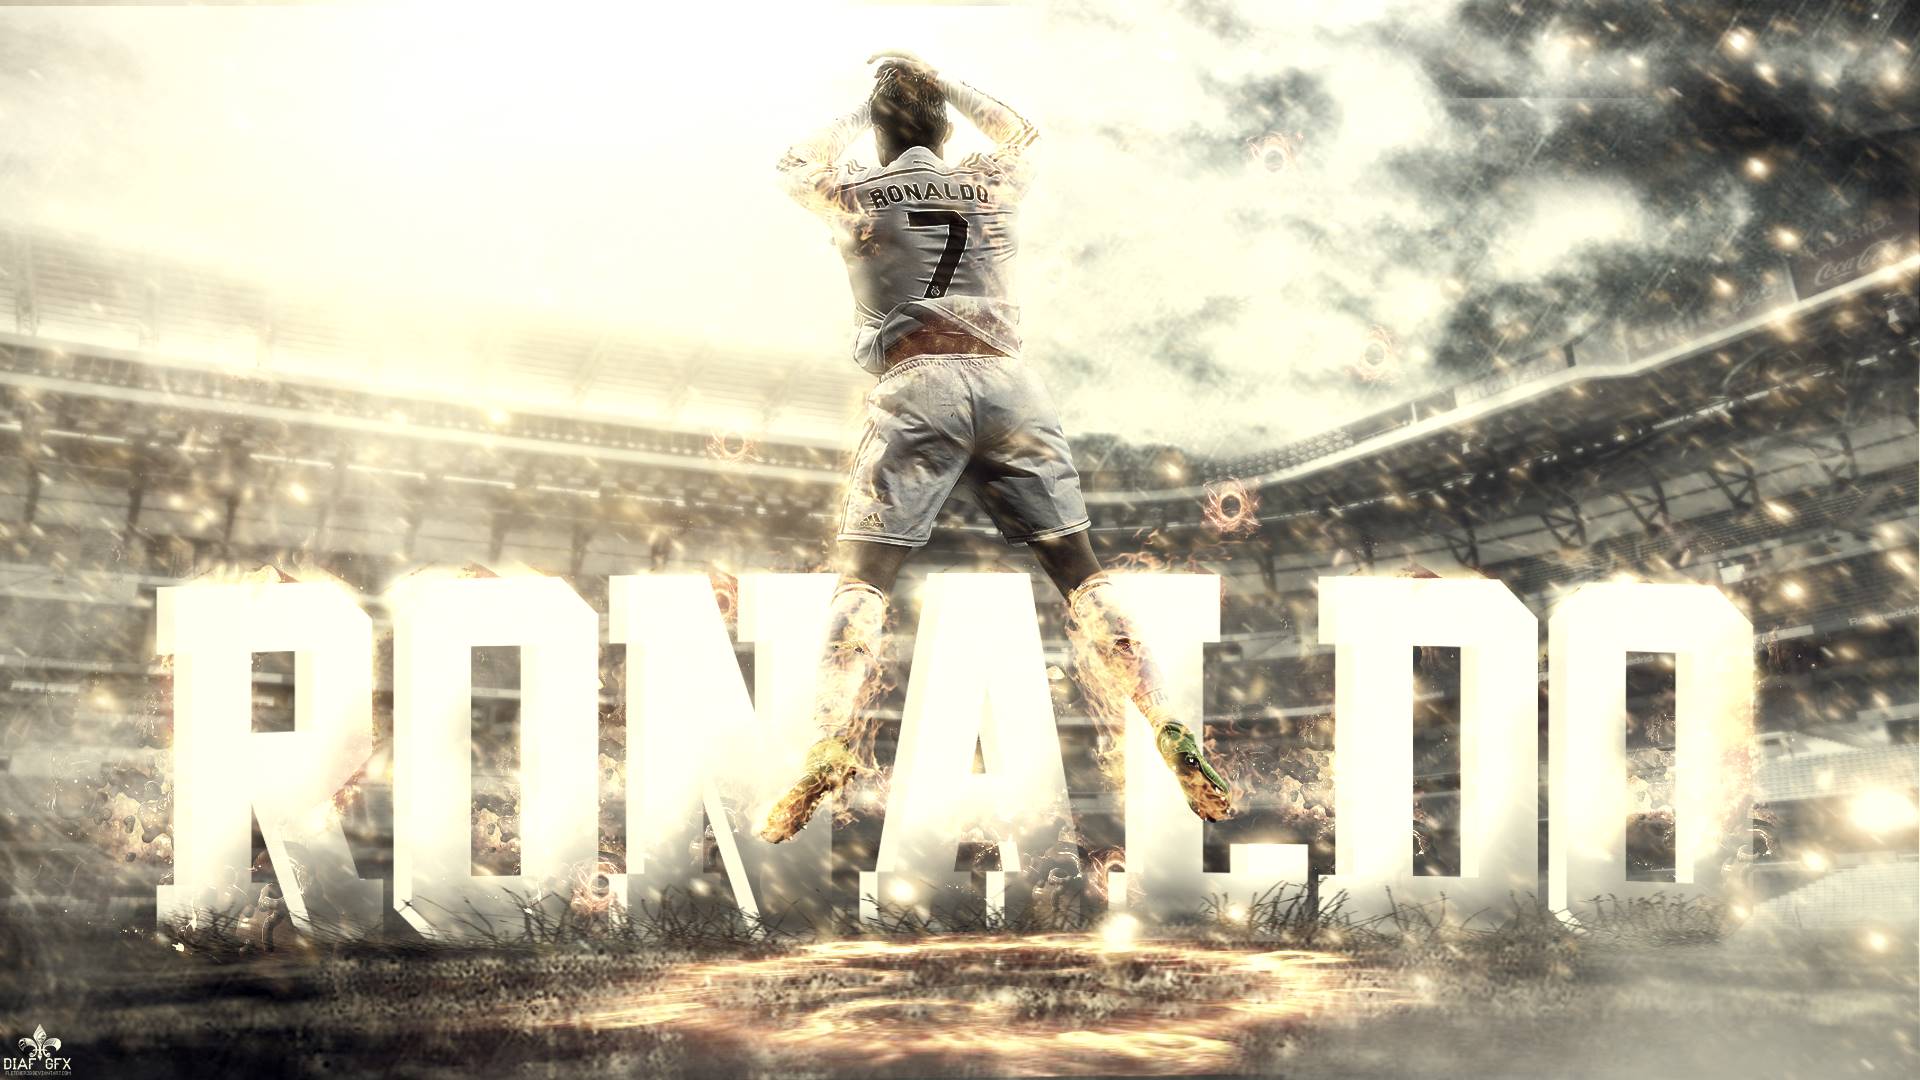 Cristiano Ronaldo Fan. News, Photo, Blog, Pics, Videos